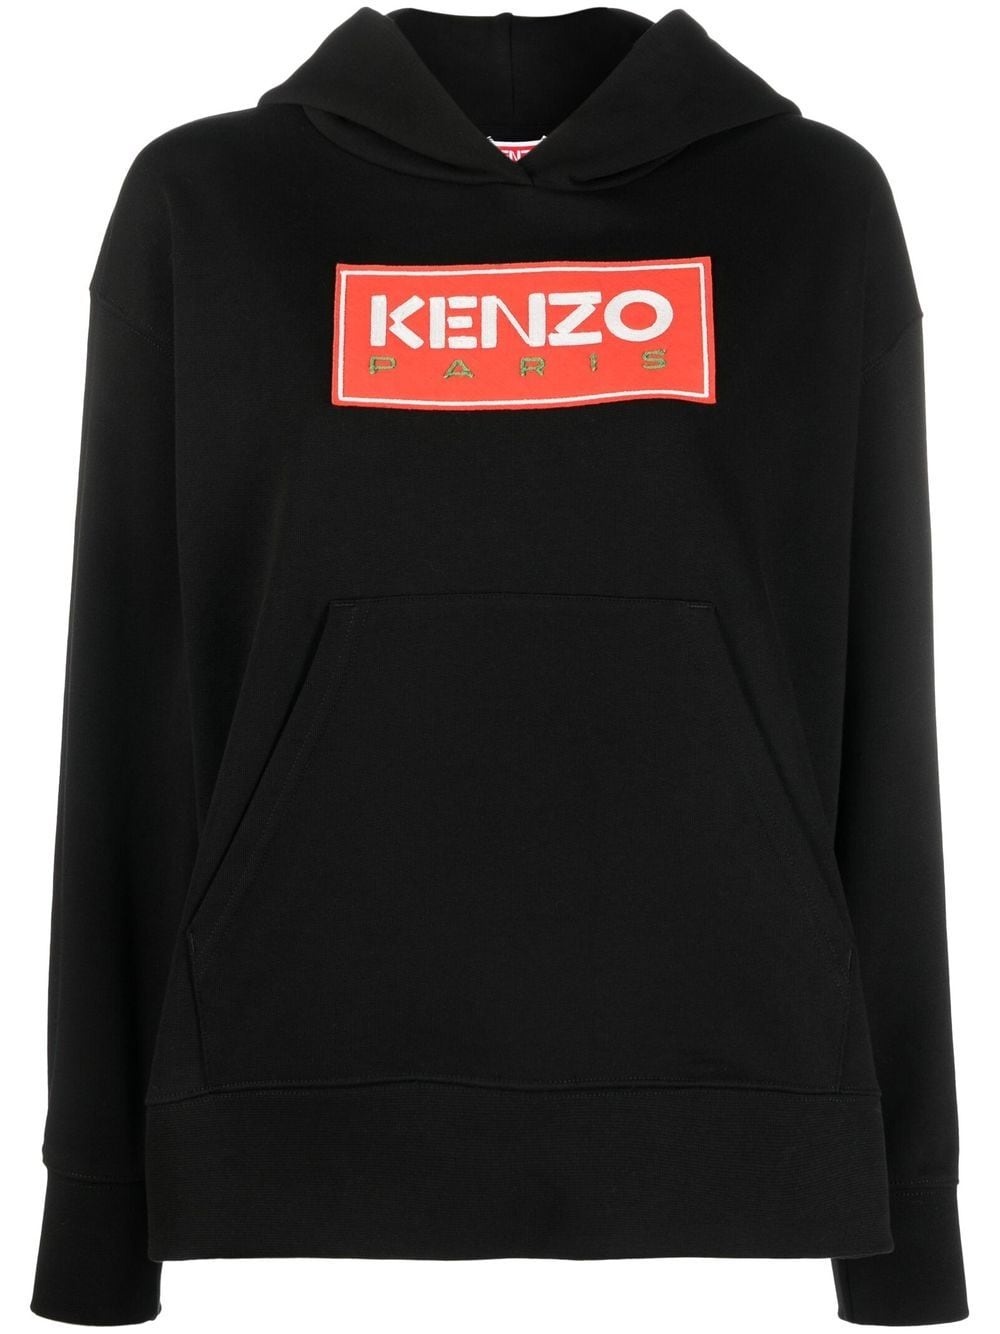 Kenzo paris oversized cotton hoodie - 1